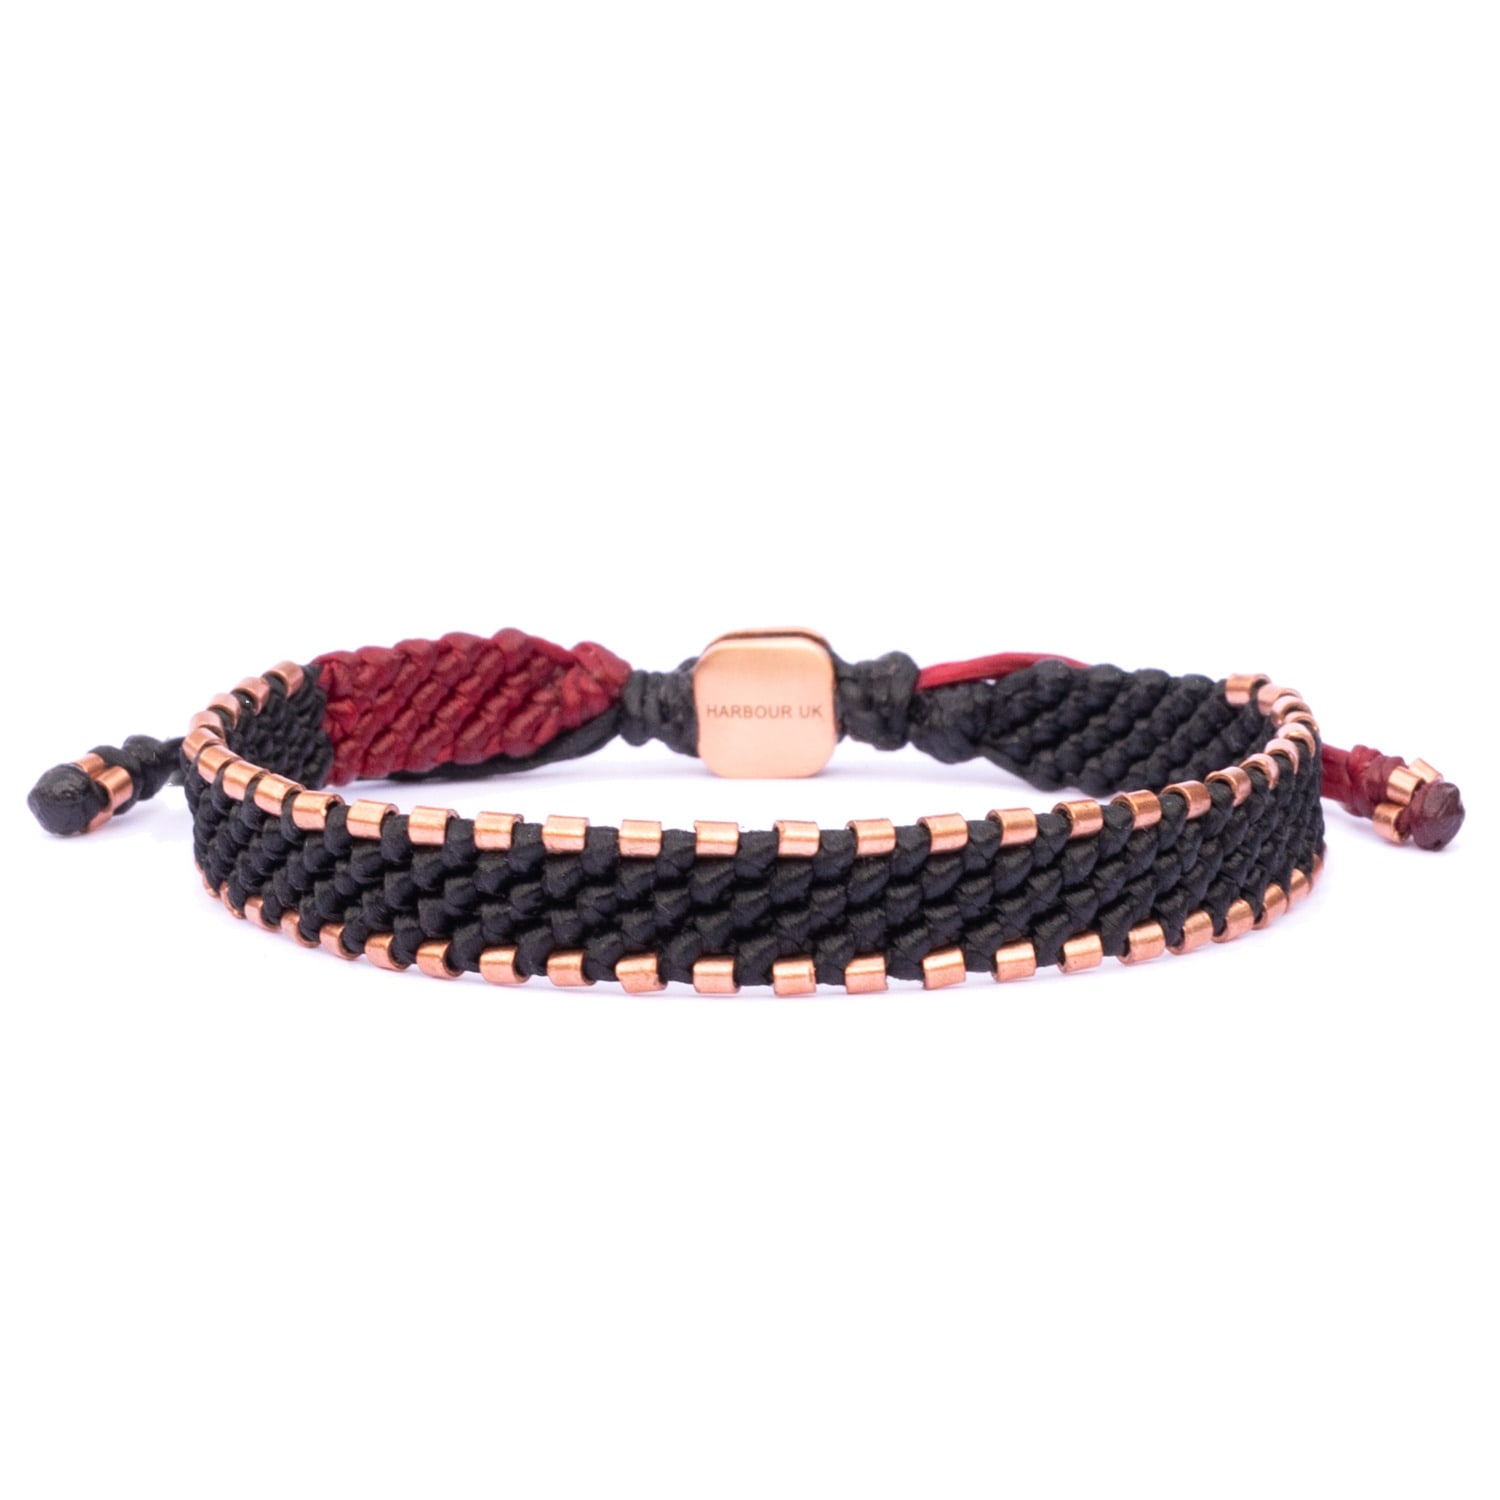 Solid Copper Bracelet For Mens Black & Red - Multicolour Harbour UK Bracelets